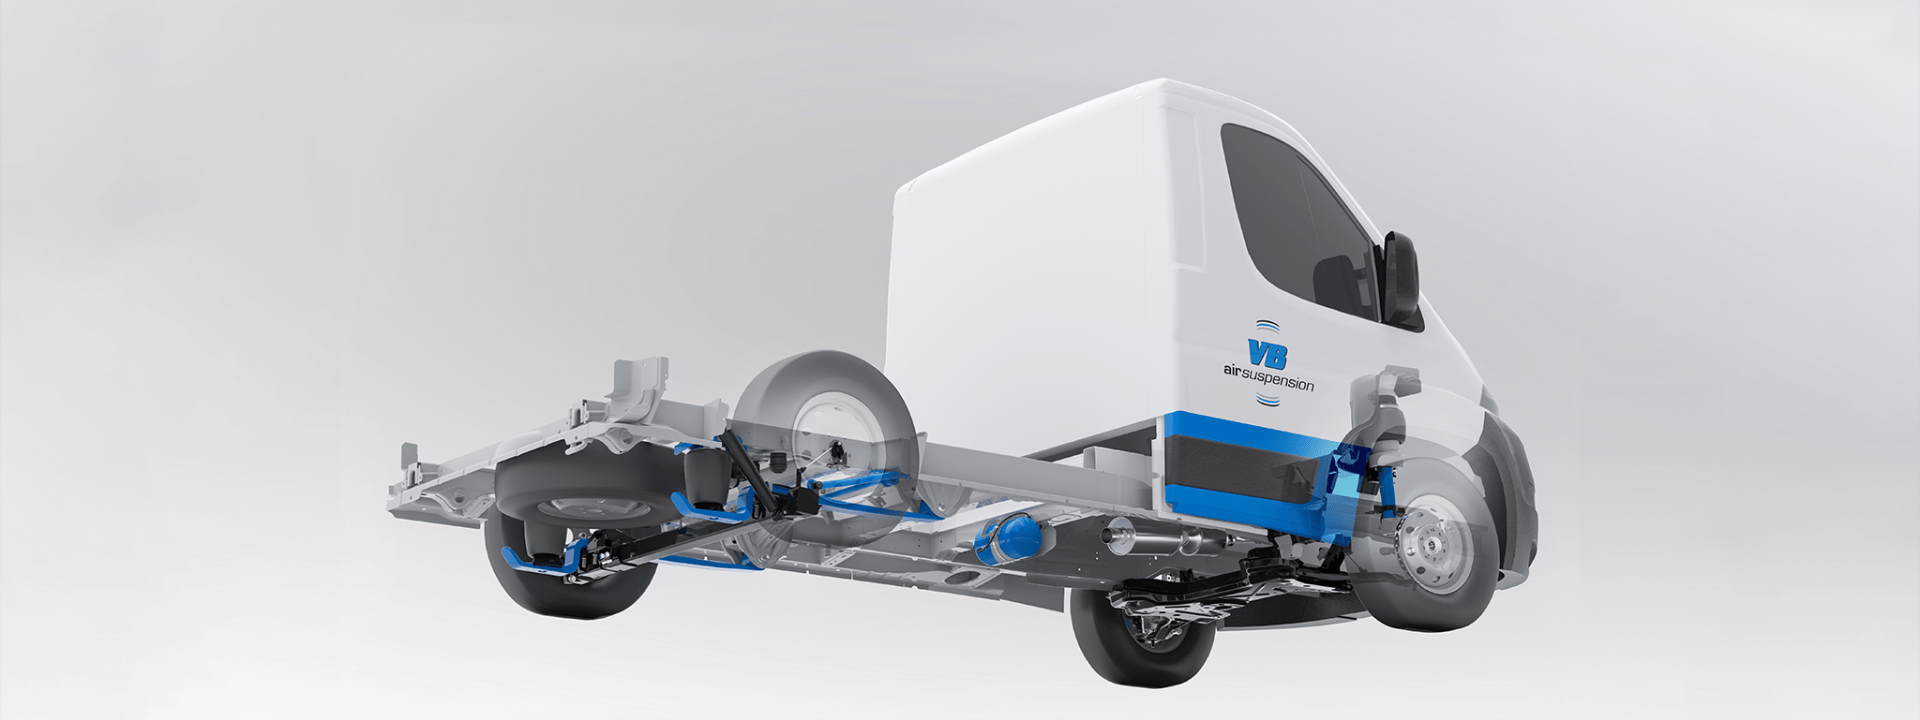 Rendu : VB-FullAir 4C véhicule avec transparence